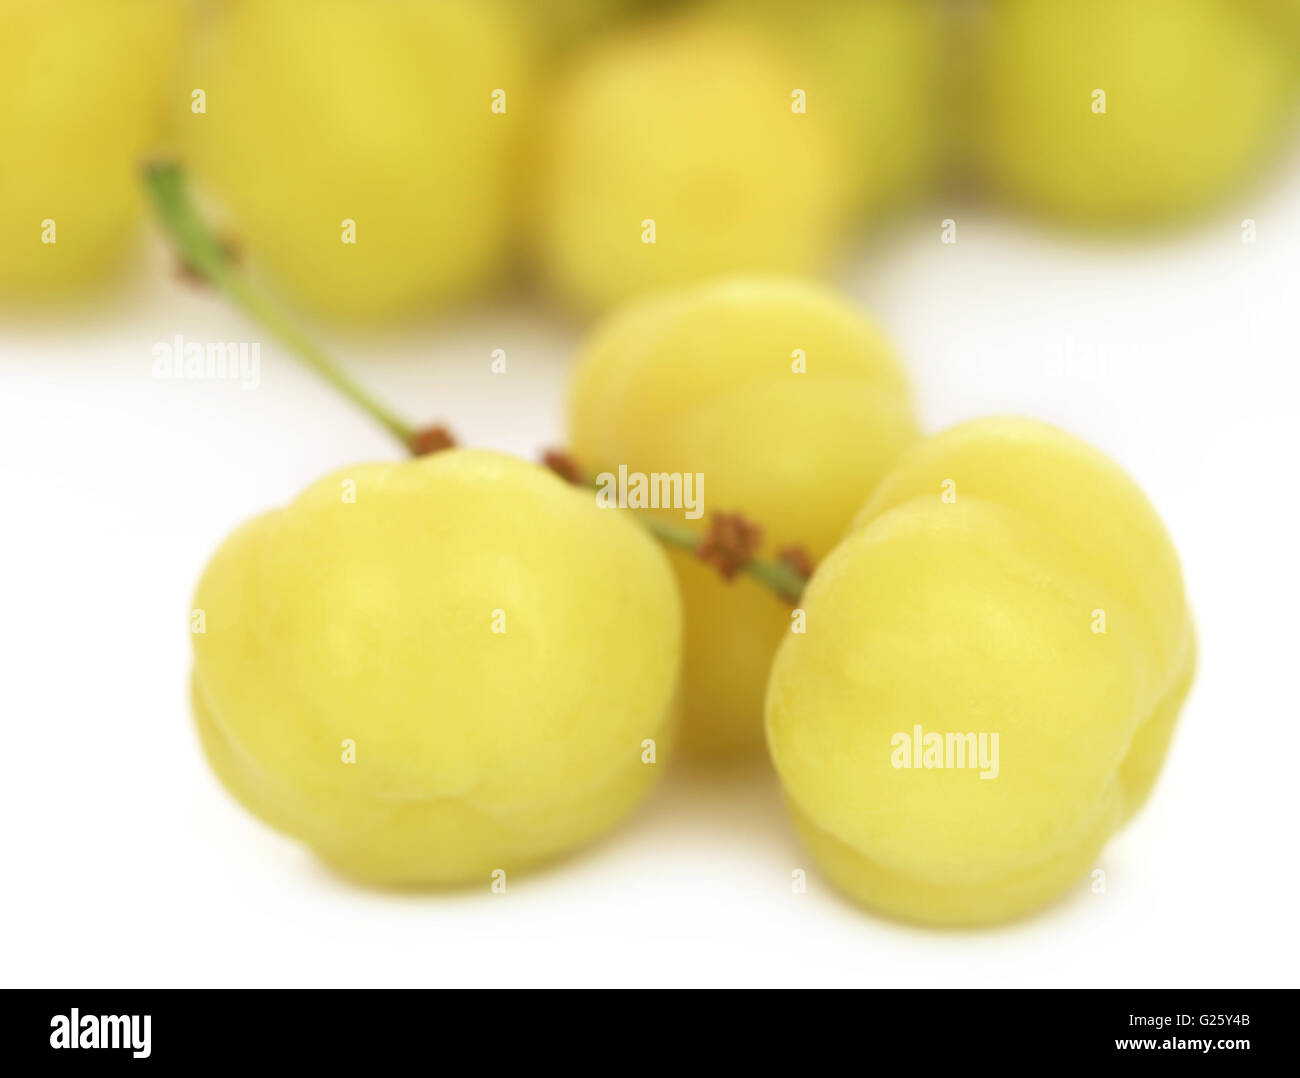 Phyllanthus acidus or Star gooseberry over white background Stock Photo